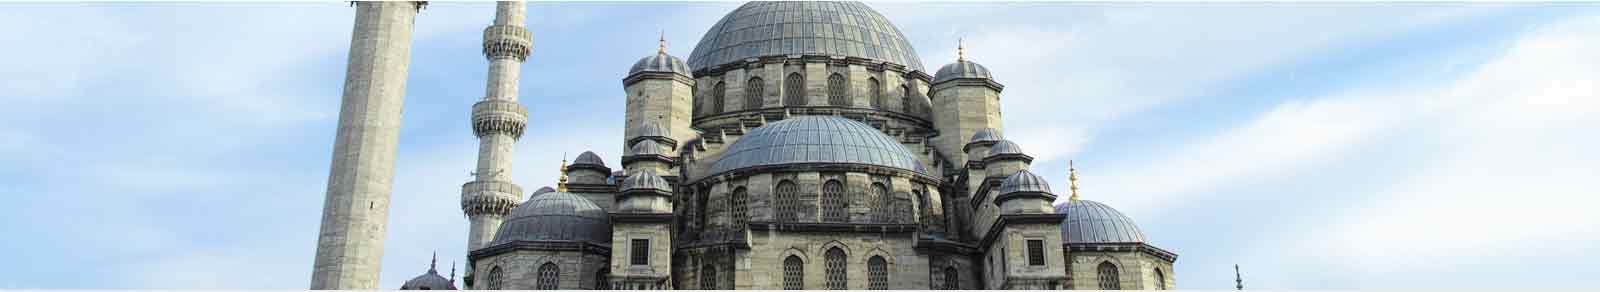 تور استانبول مهر ۱۴۰۳